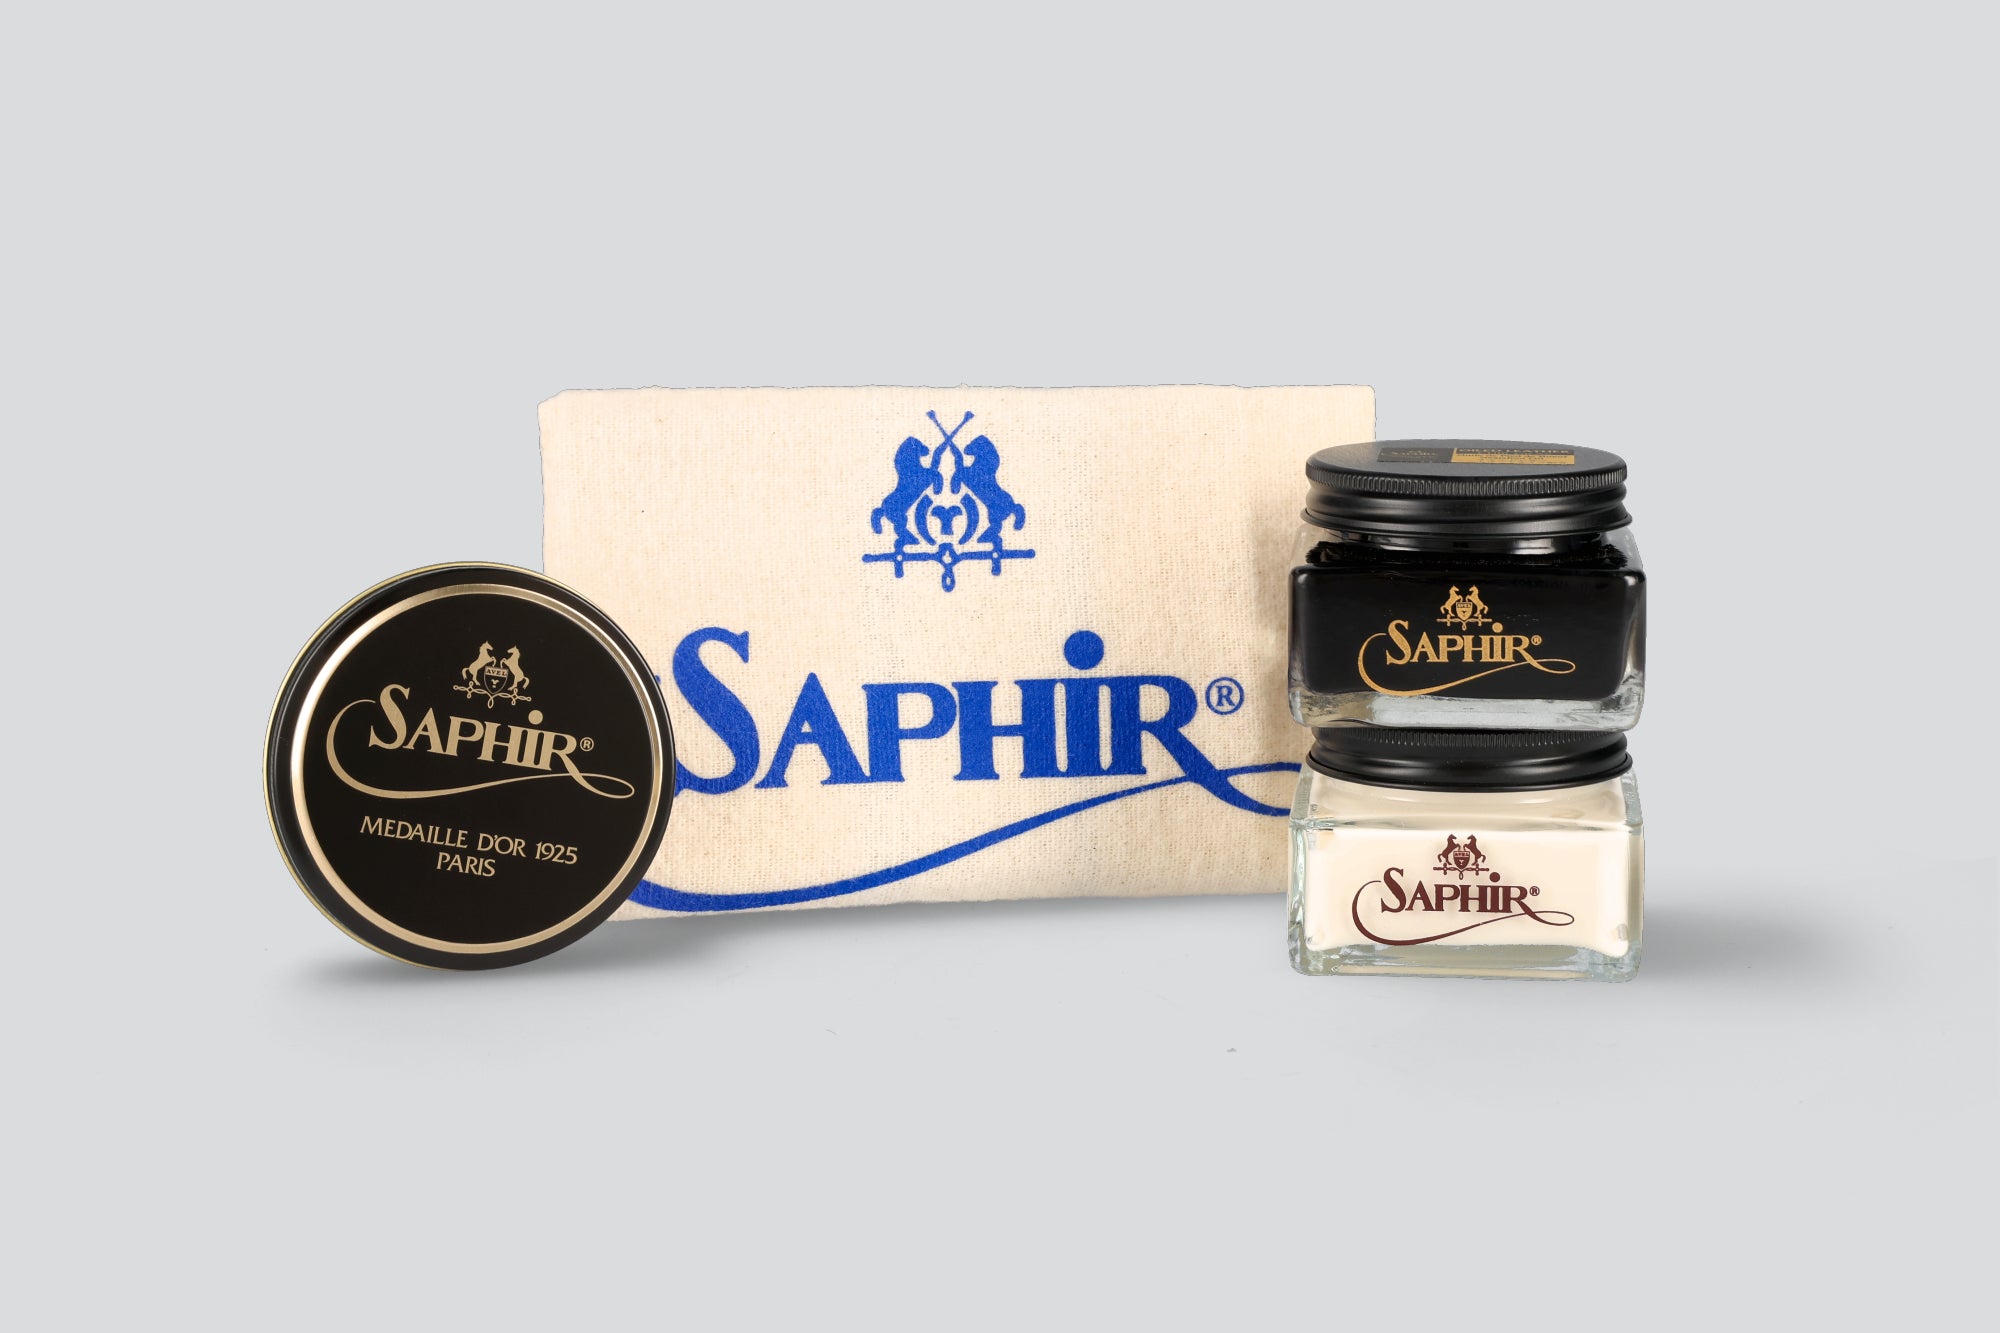 Saphir shoe polish kit from the Hartt Shoe Company